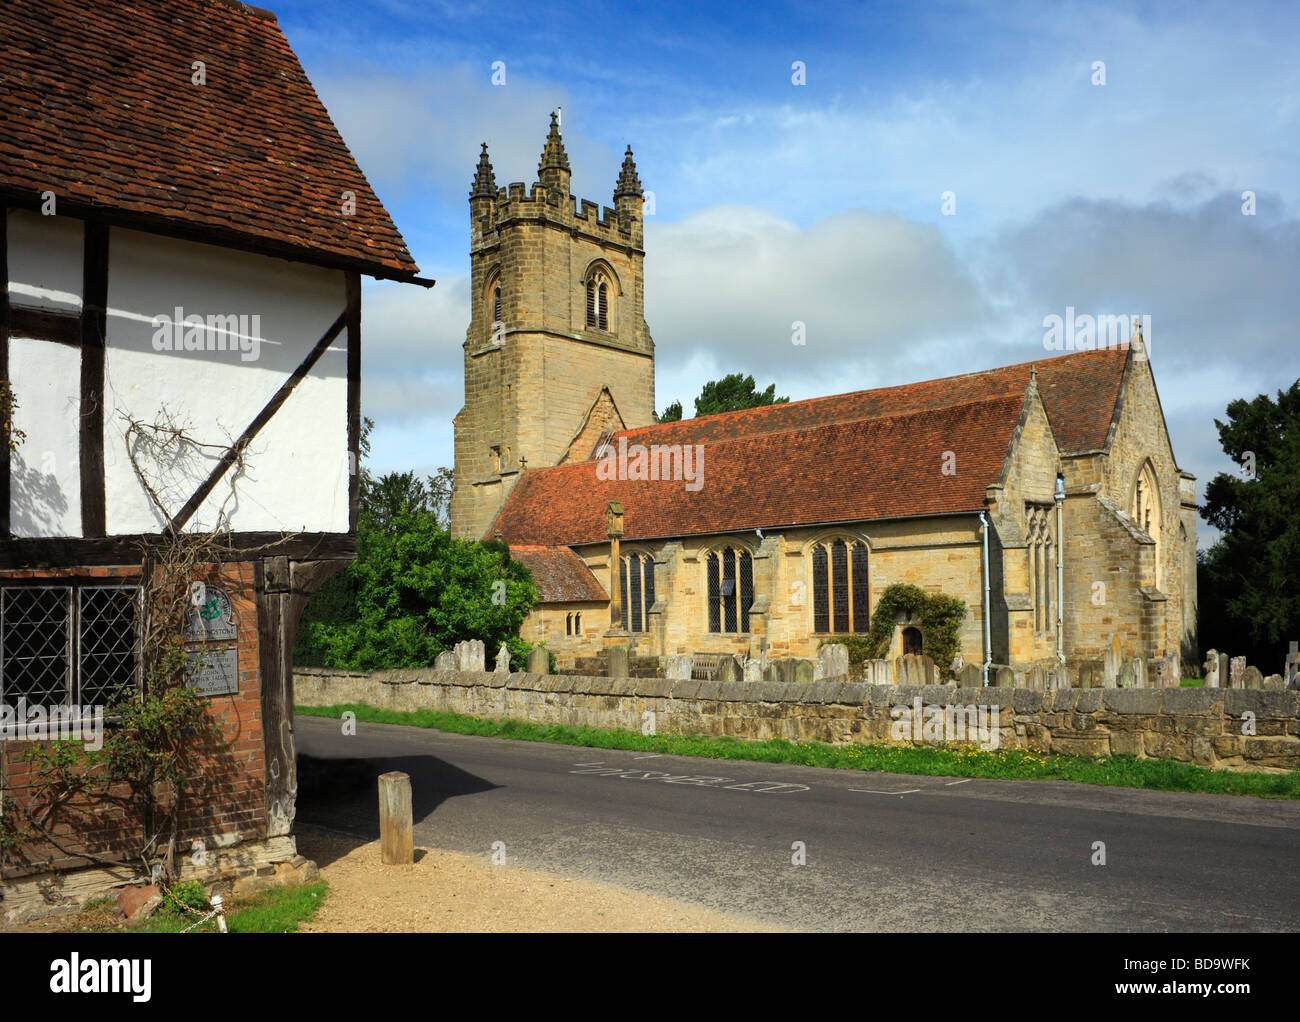 St Marys Church Chiddingstone, Kent, England, UK. Stock Photo